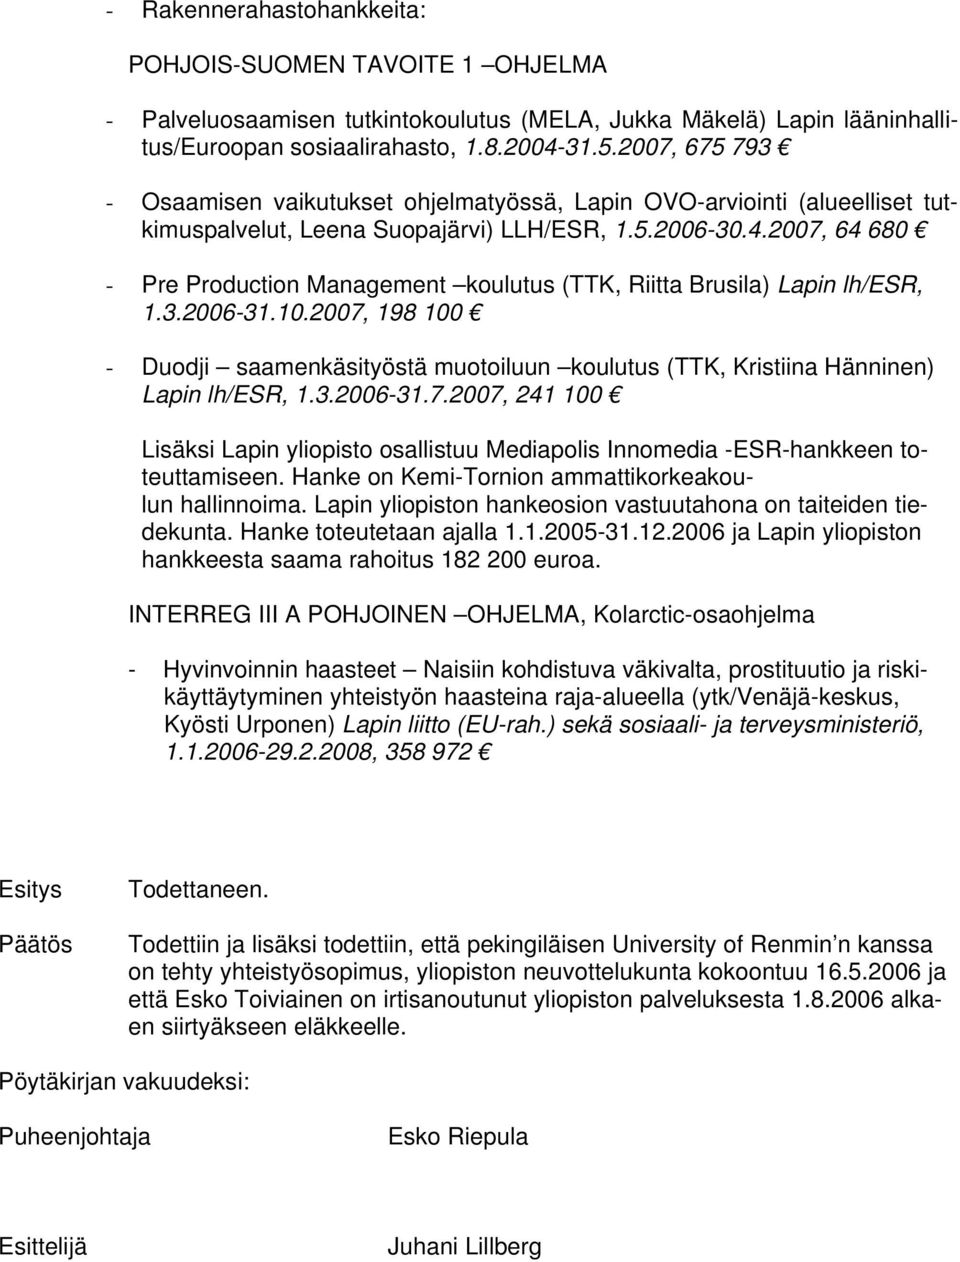 2007, 64 680 - Pre Production Management koulutus (TTK, Riitta Brusila) Lapin lh/esr, 1.3.2006-31.10.